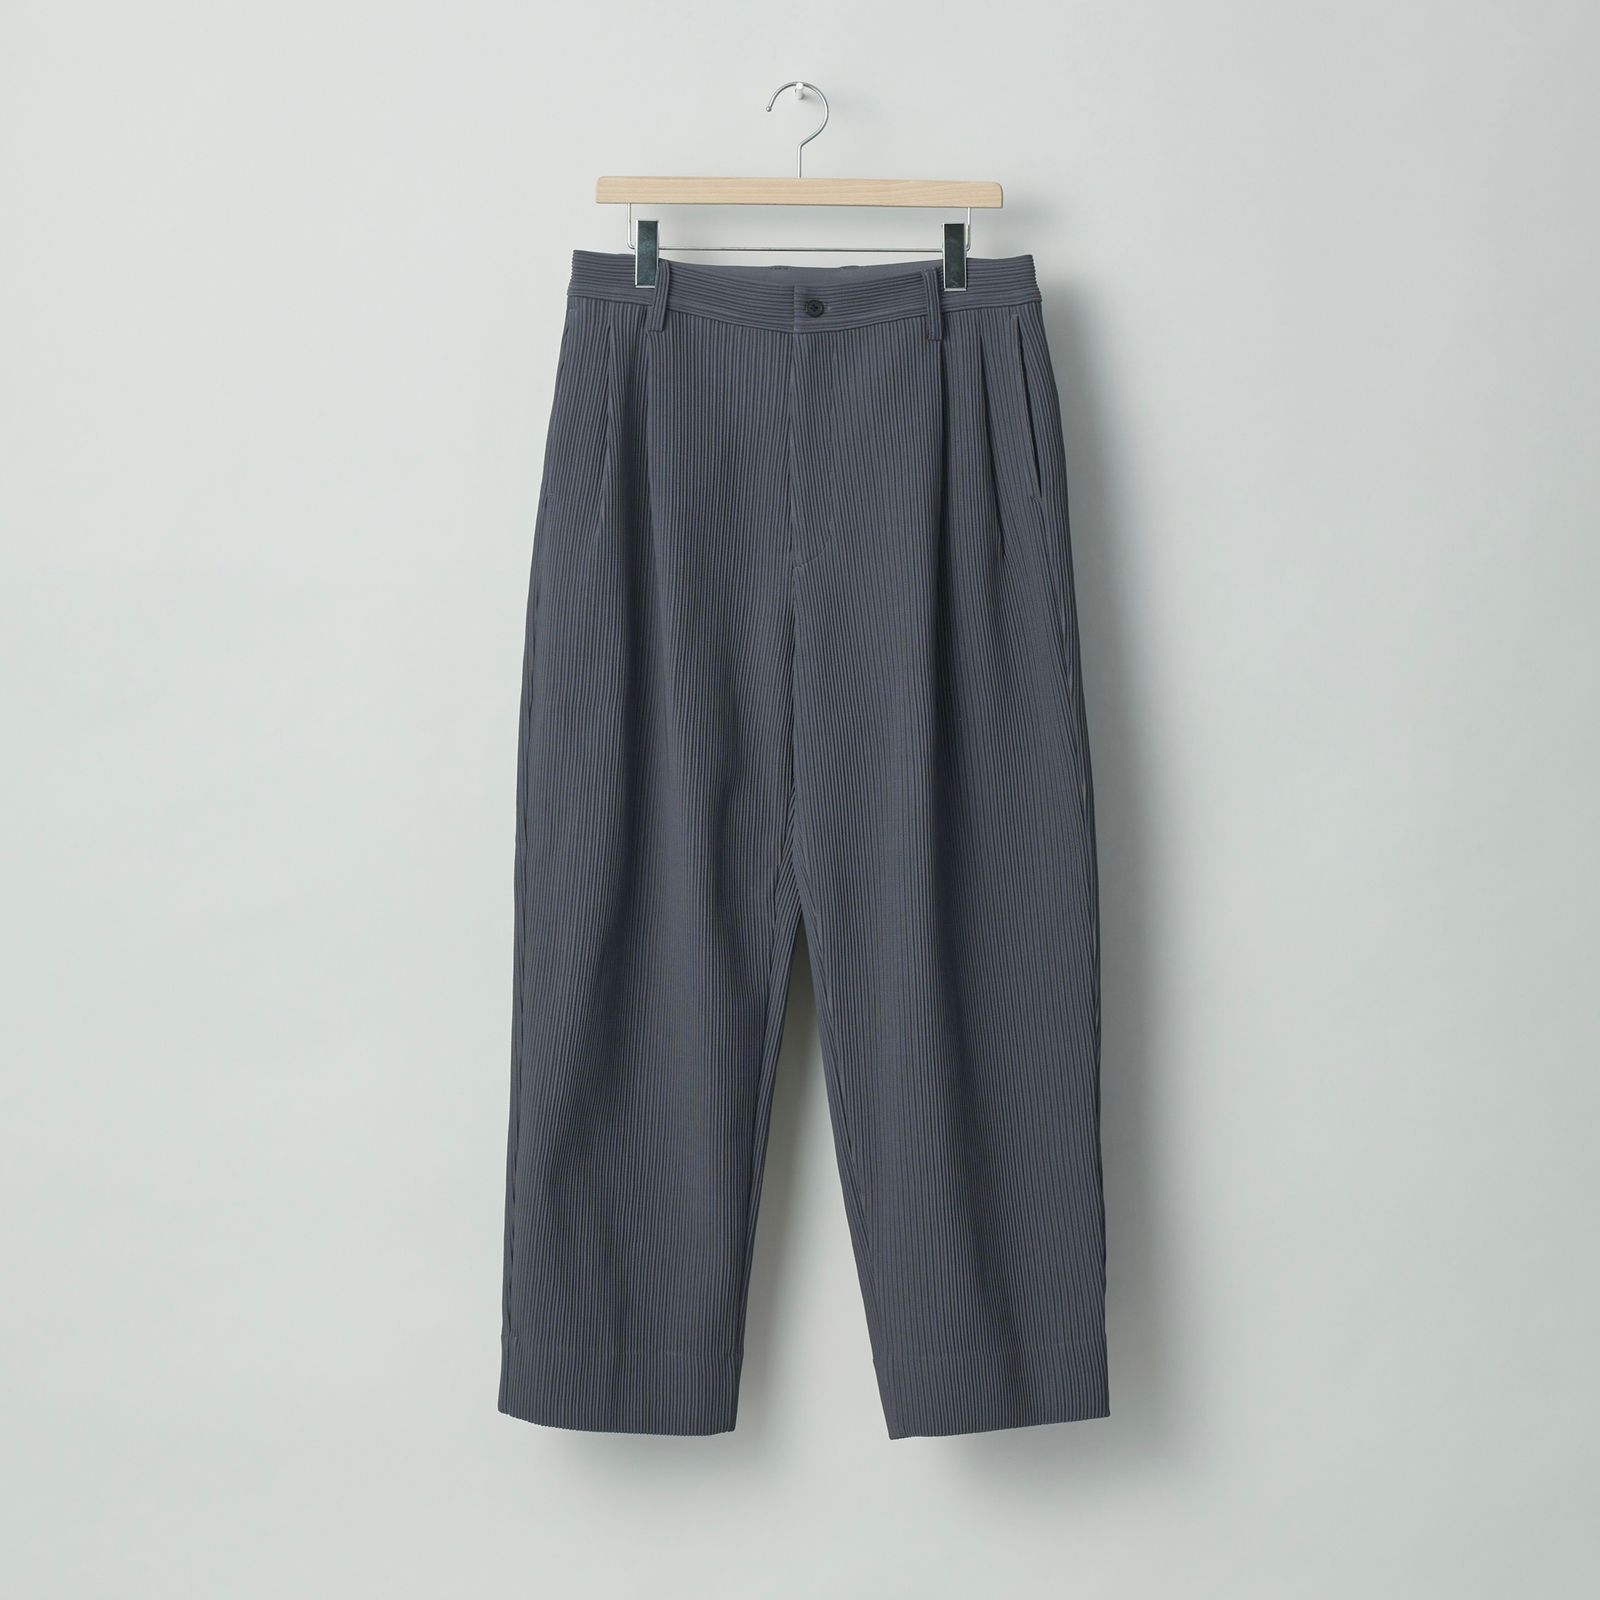 ssstein (シュタイン) - 【残りわずか】Gradation PLEATS Two TUCK Trousers - M / Blue Grey / Unisex